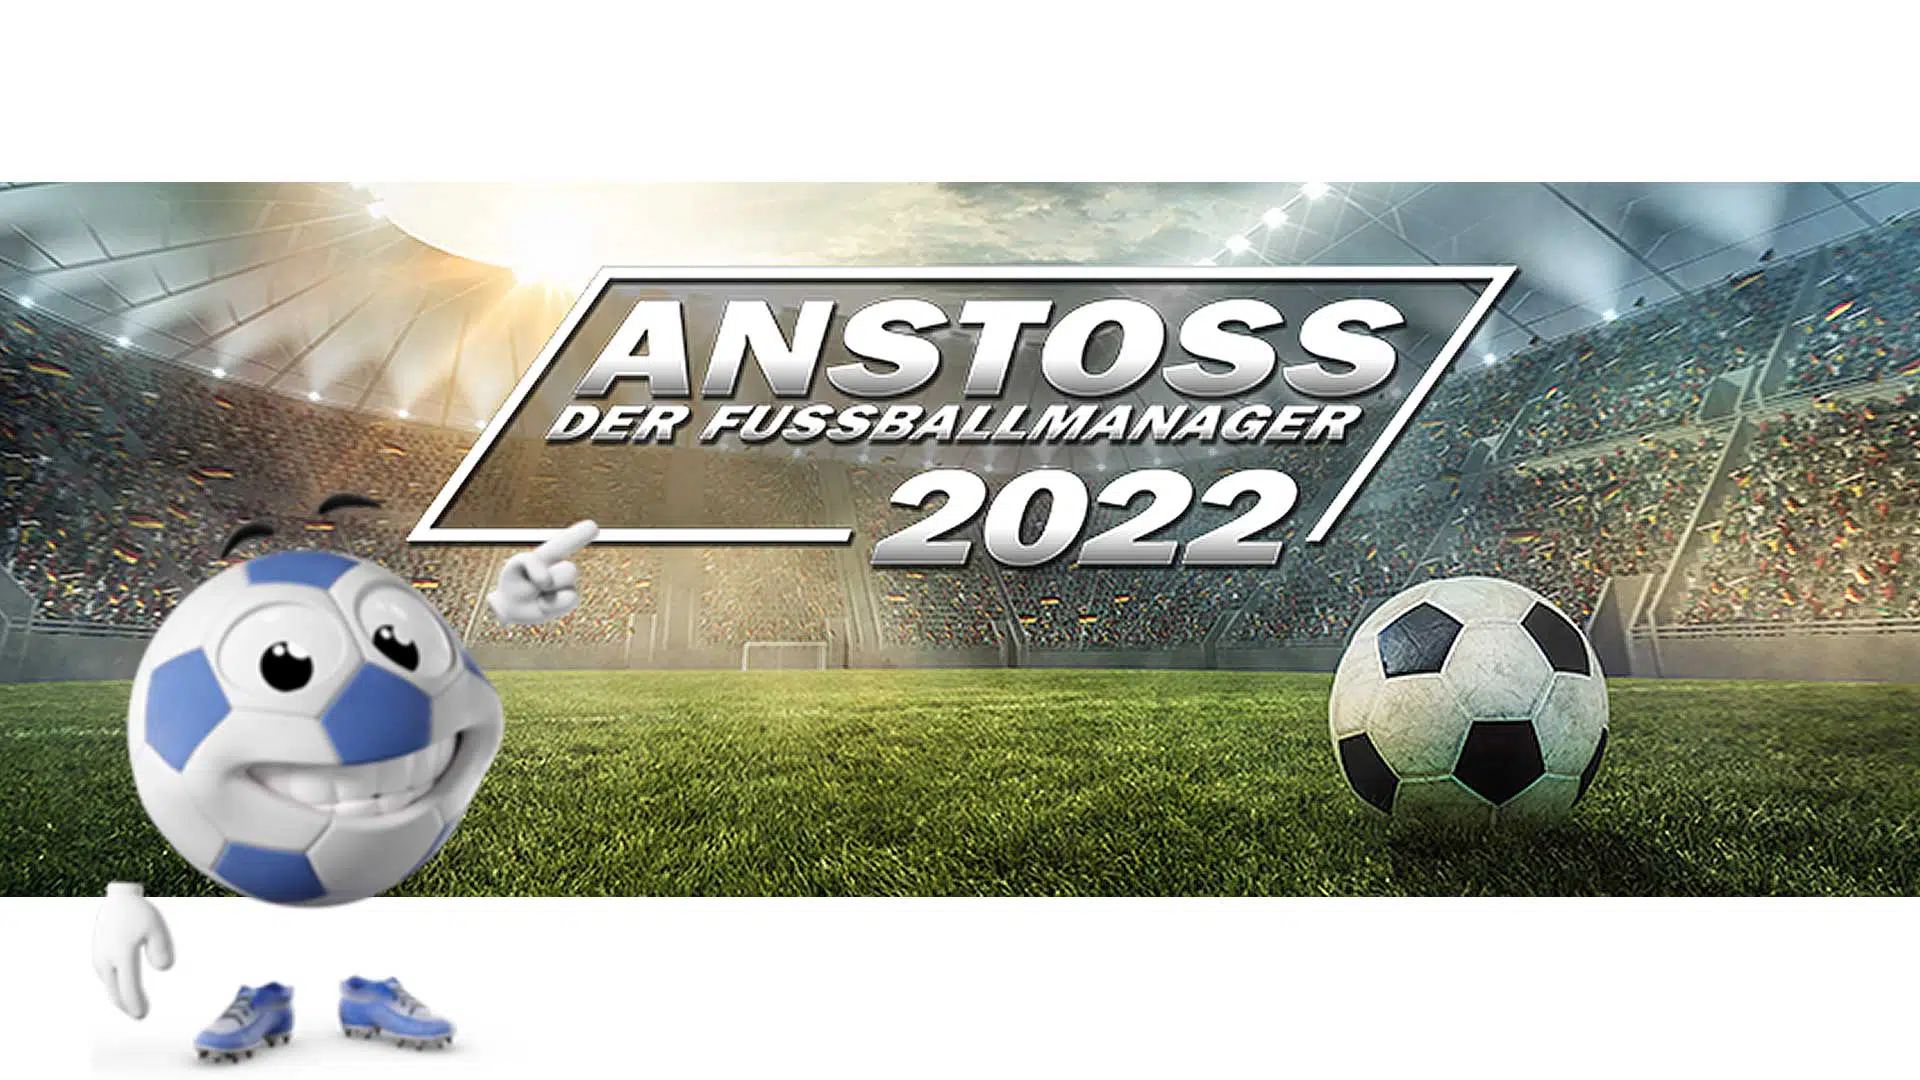 Anstoss 2022 auf Kickstarter: Der Fussballmanager kommt zurück